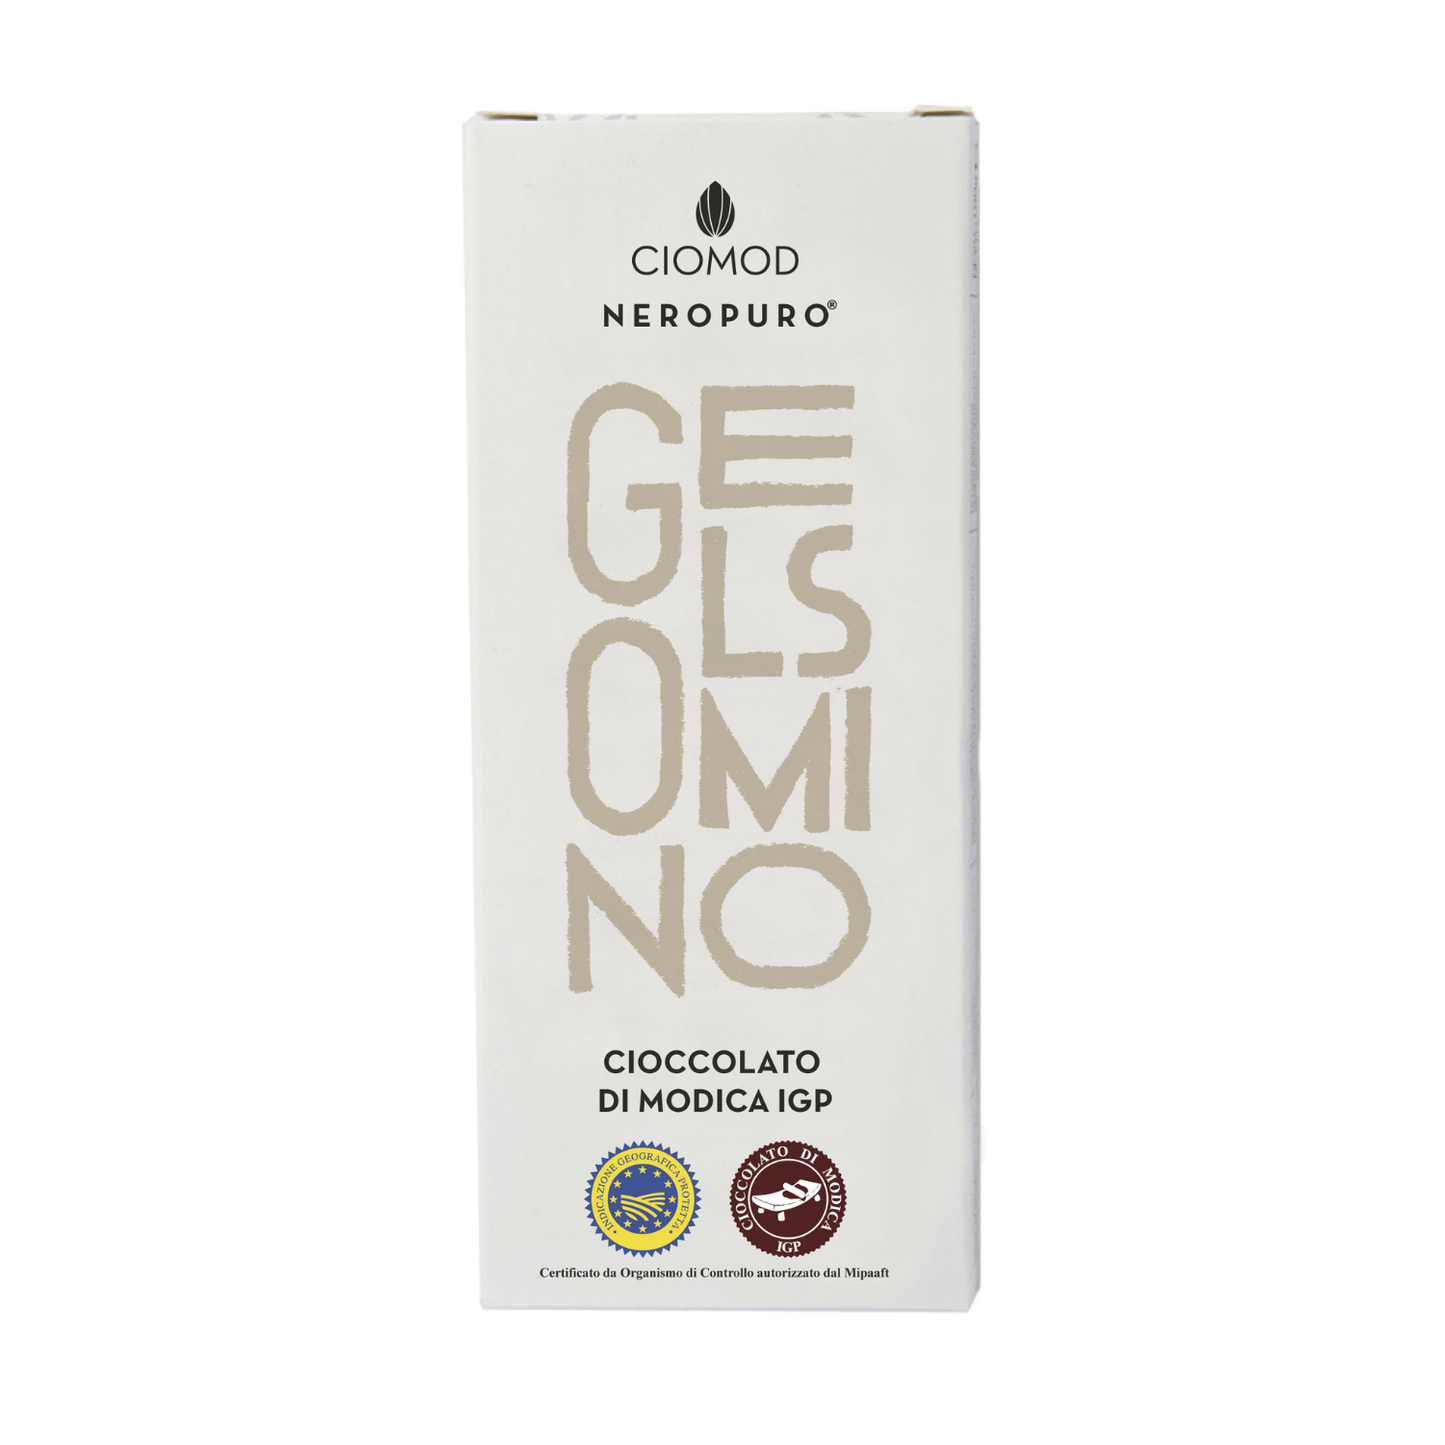 Cioccolato di Modica Igp al Gelsomino - Ciomod